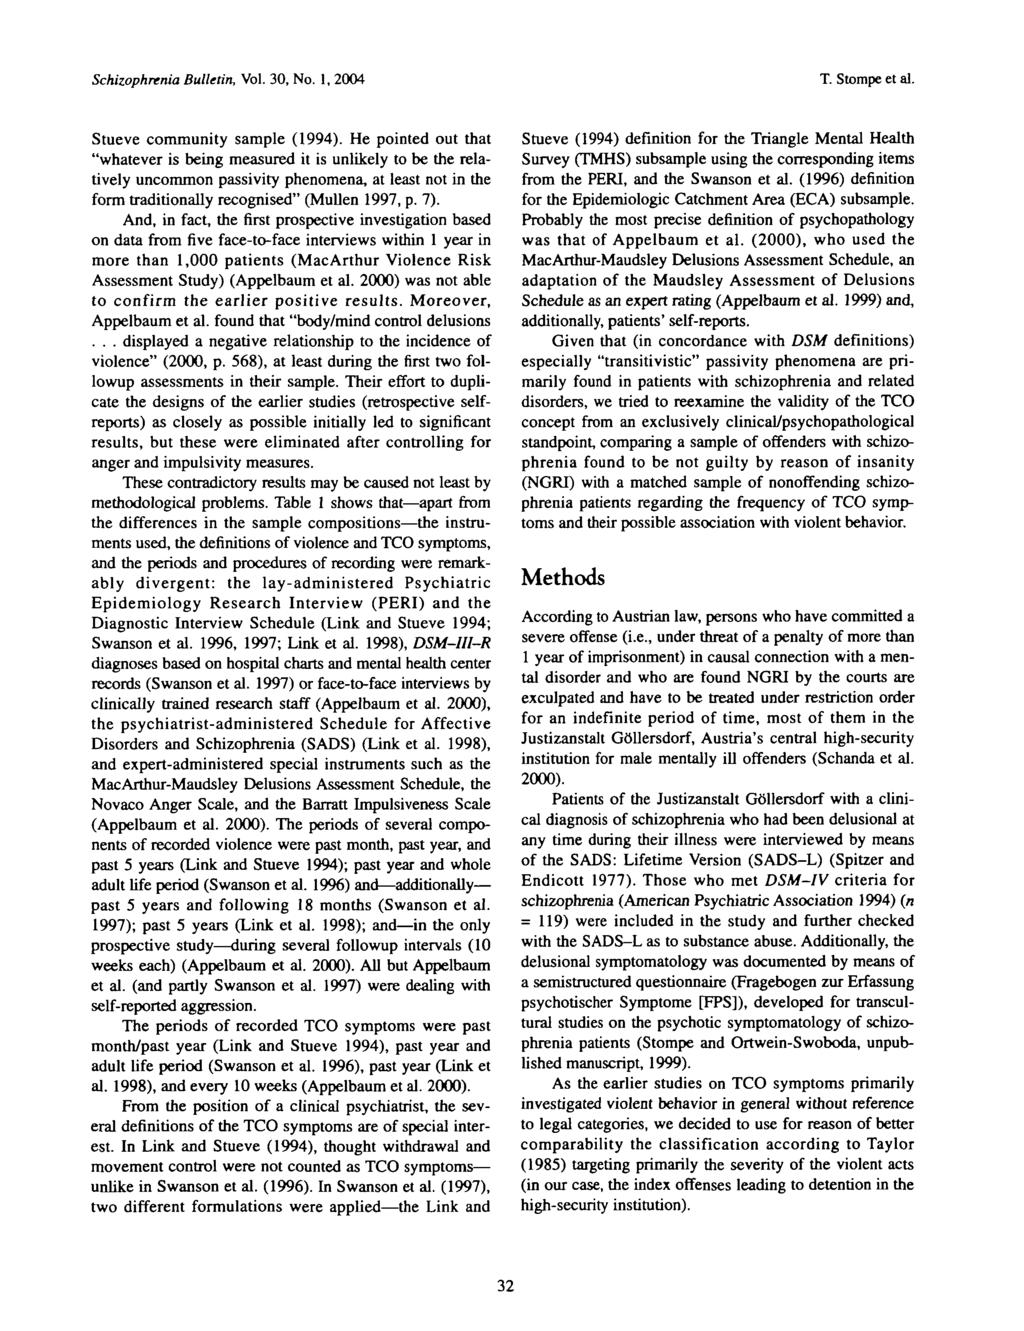 Schizophrenia Bulletin, Vol. 30, No. 1, 2004 T. Stompe et al. Stueve community sample (1994).